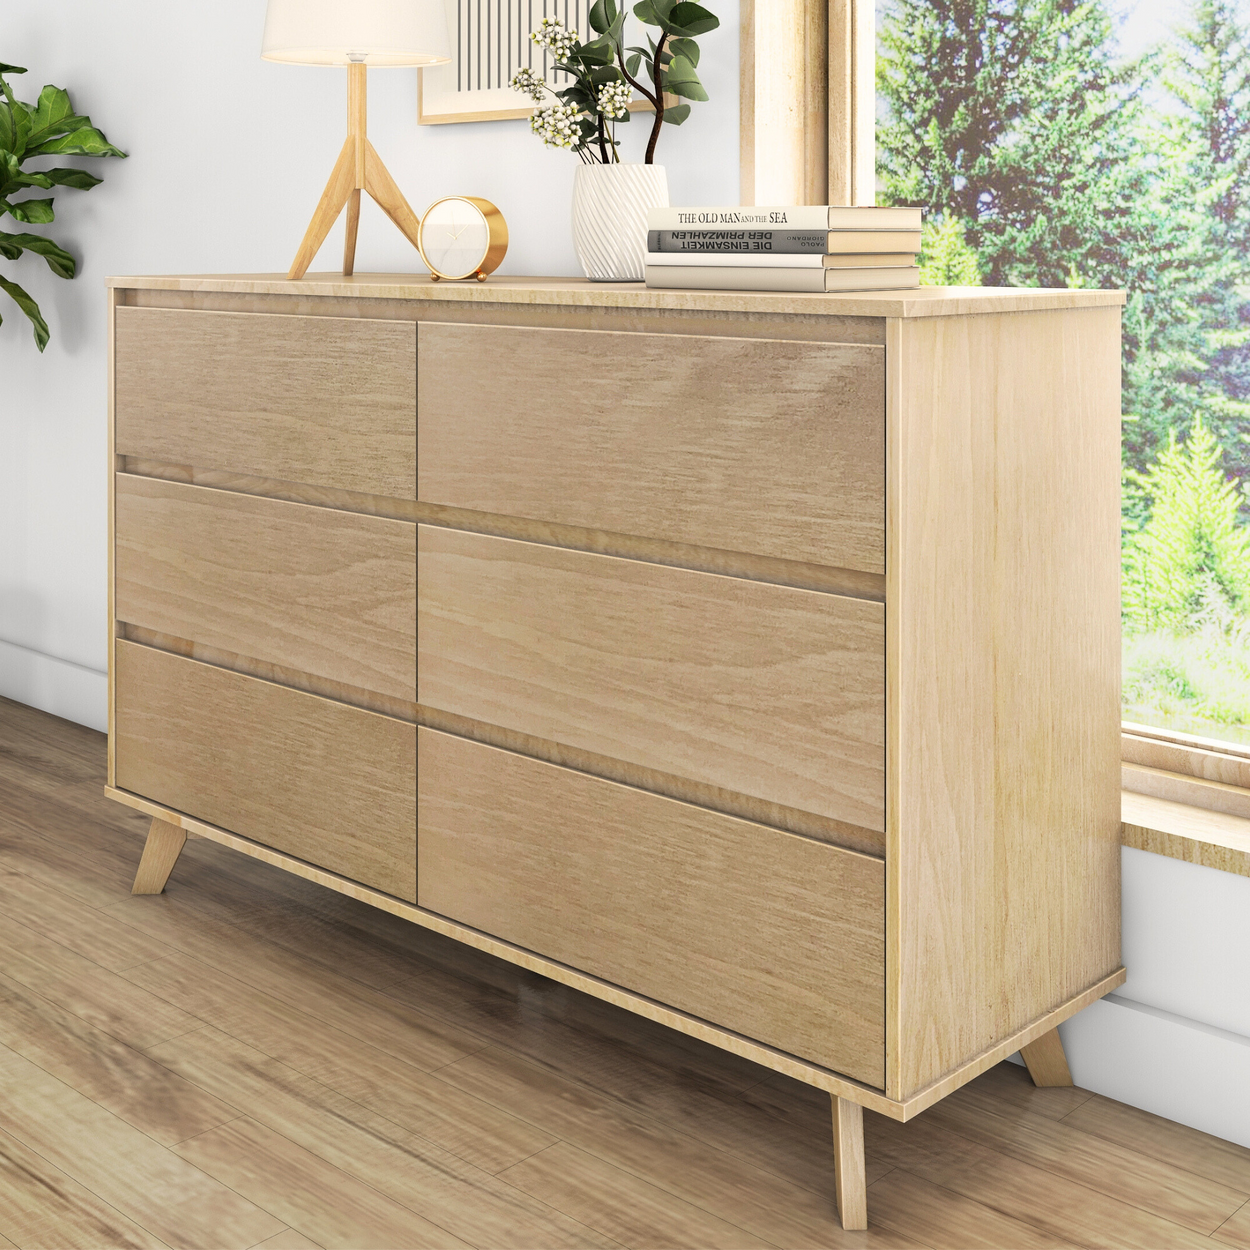 2100216000-010 : Furniture Scandinavian 6 Drawer Dresser, Blonde